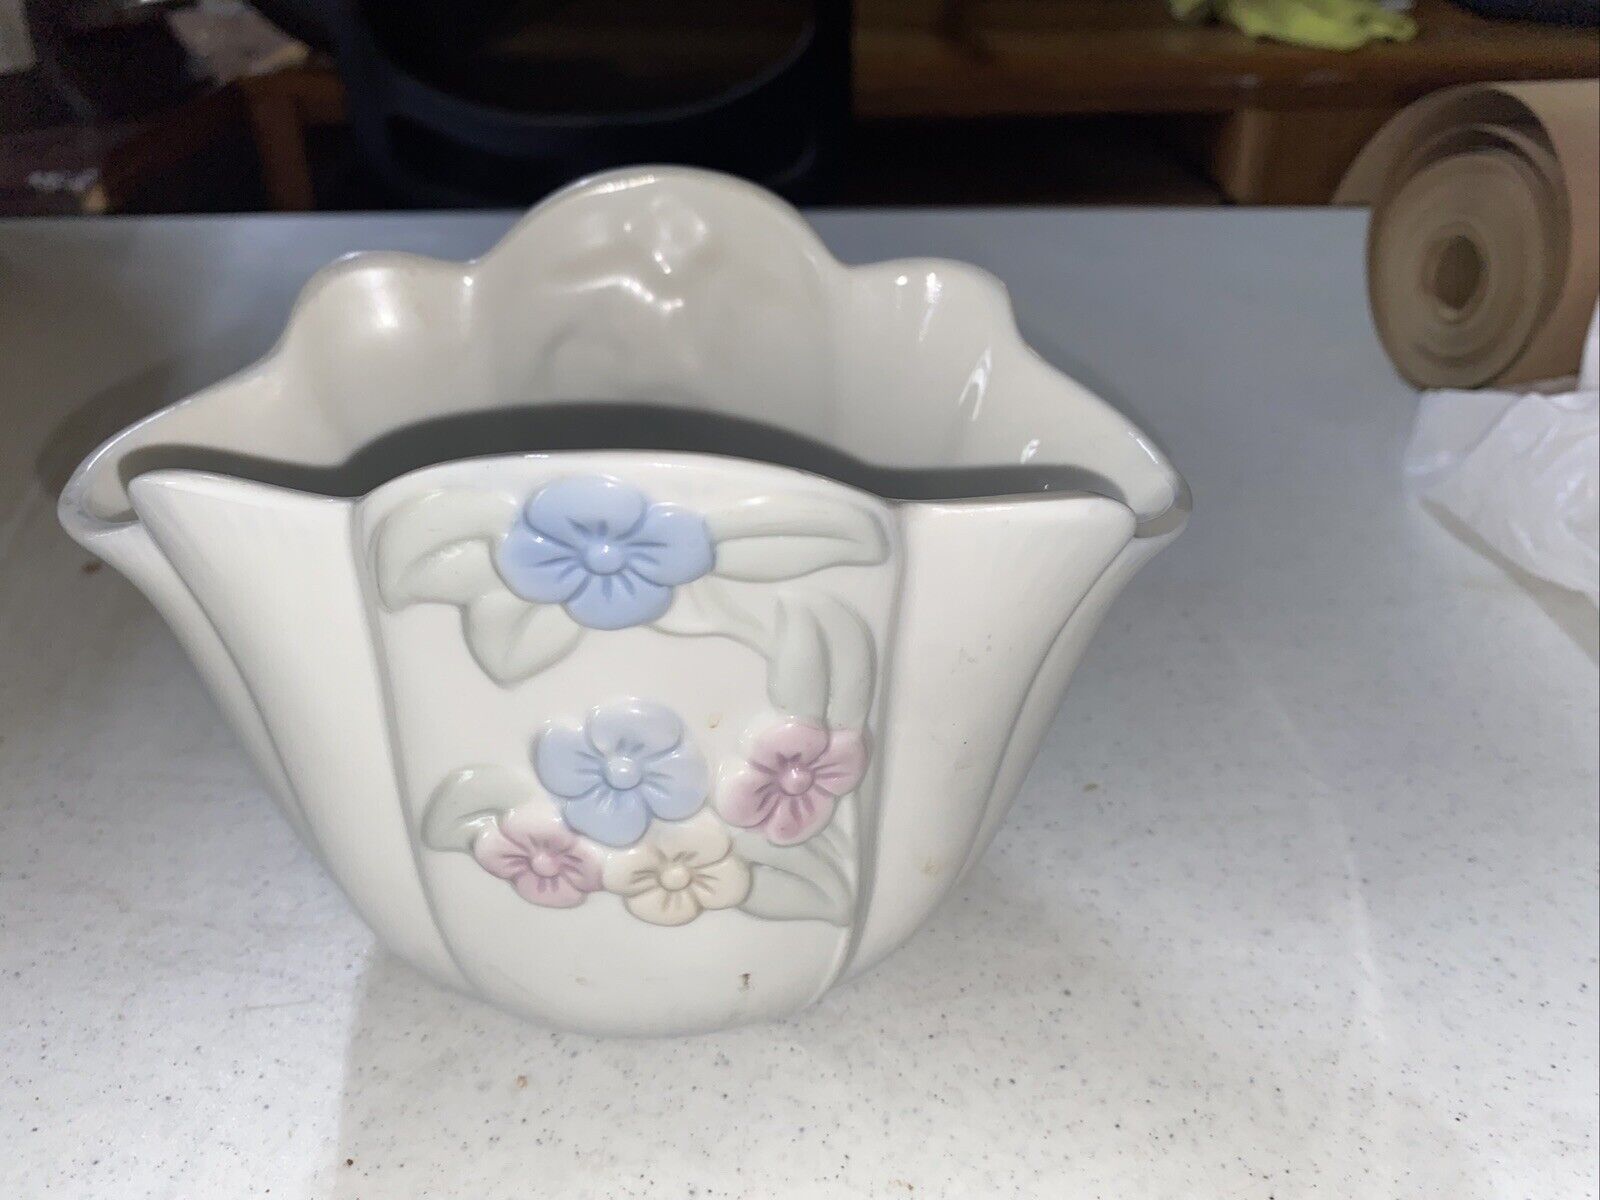 Vintage Ceramic Flower Pot with flowers on it. Flower Pot/Caddy